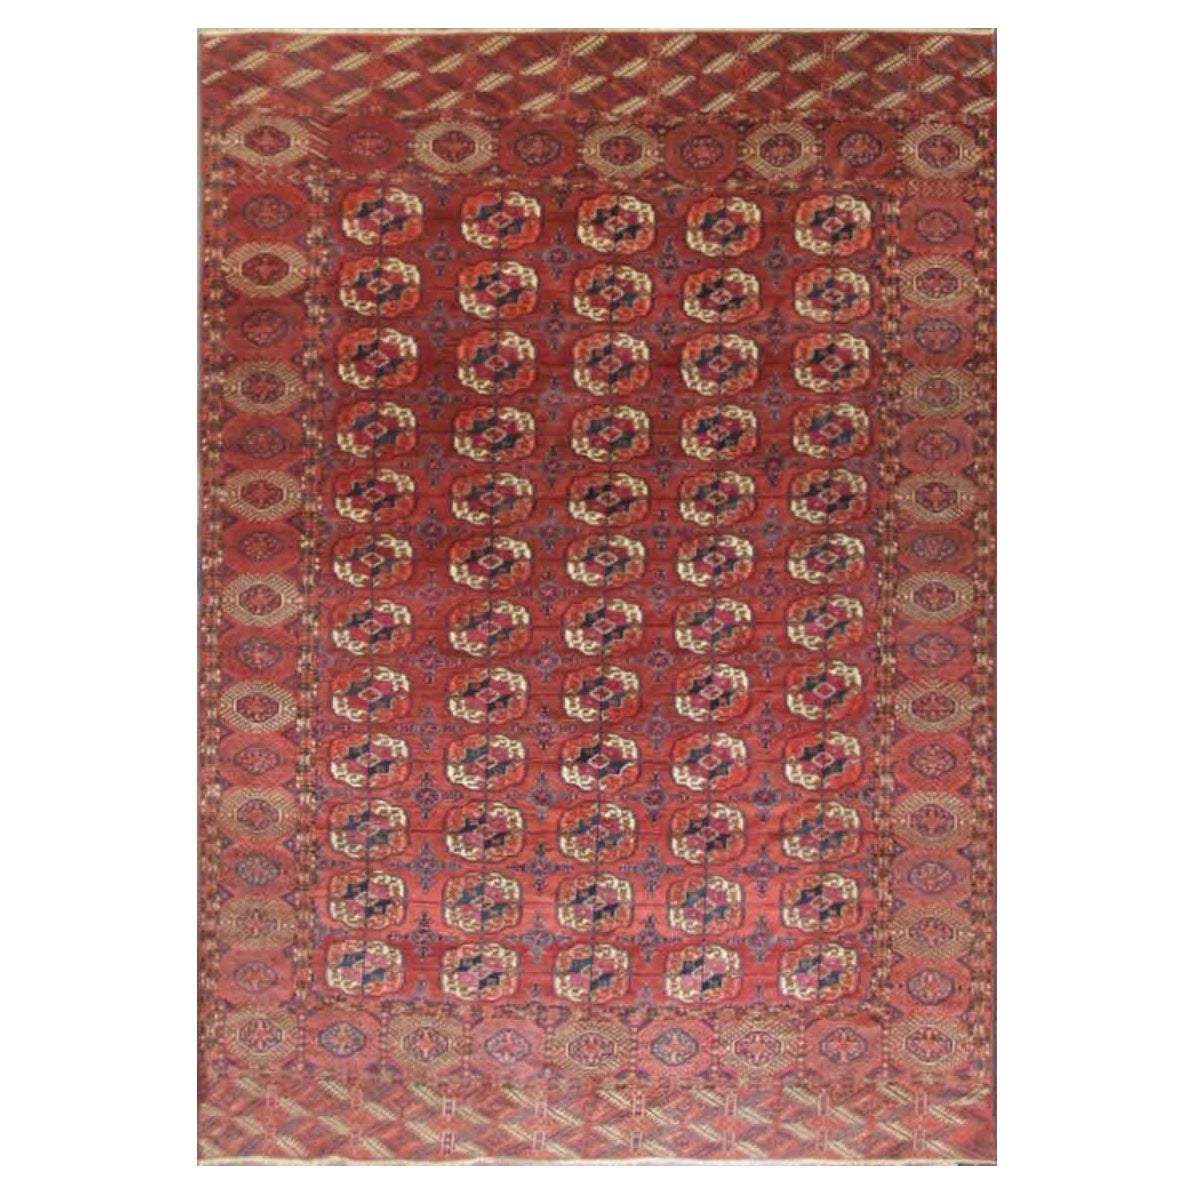 Antique Turkoman Tekke Main Carpet, 7'6" x 10'7" For Sale